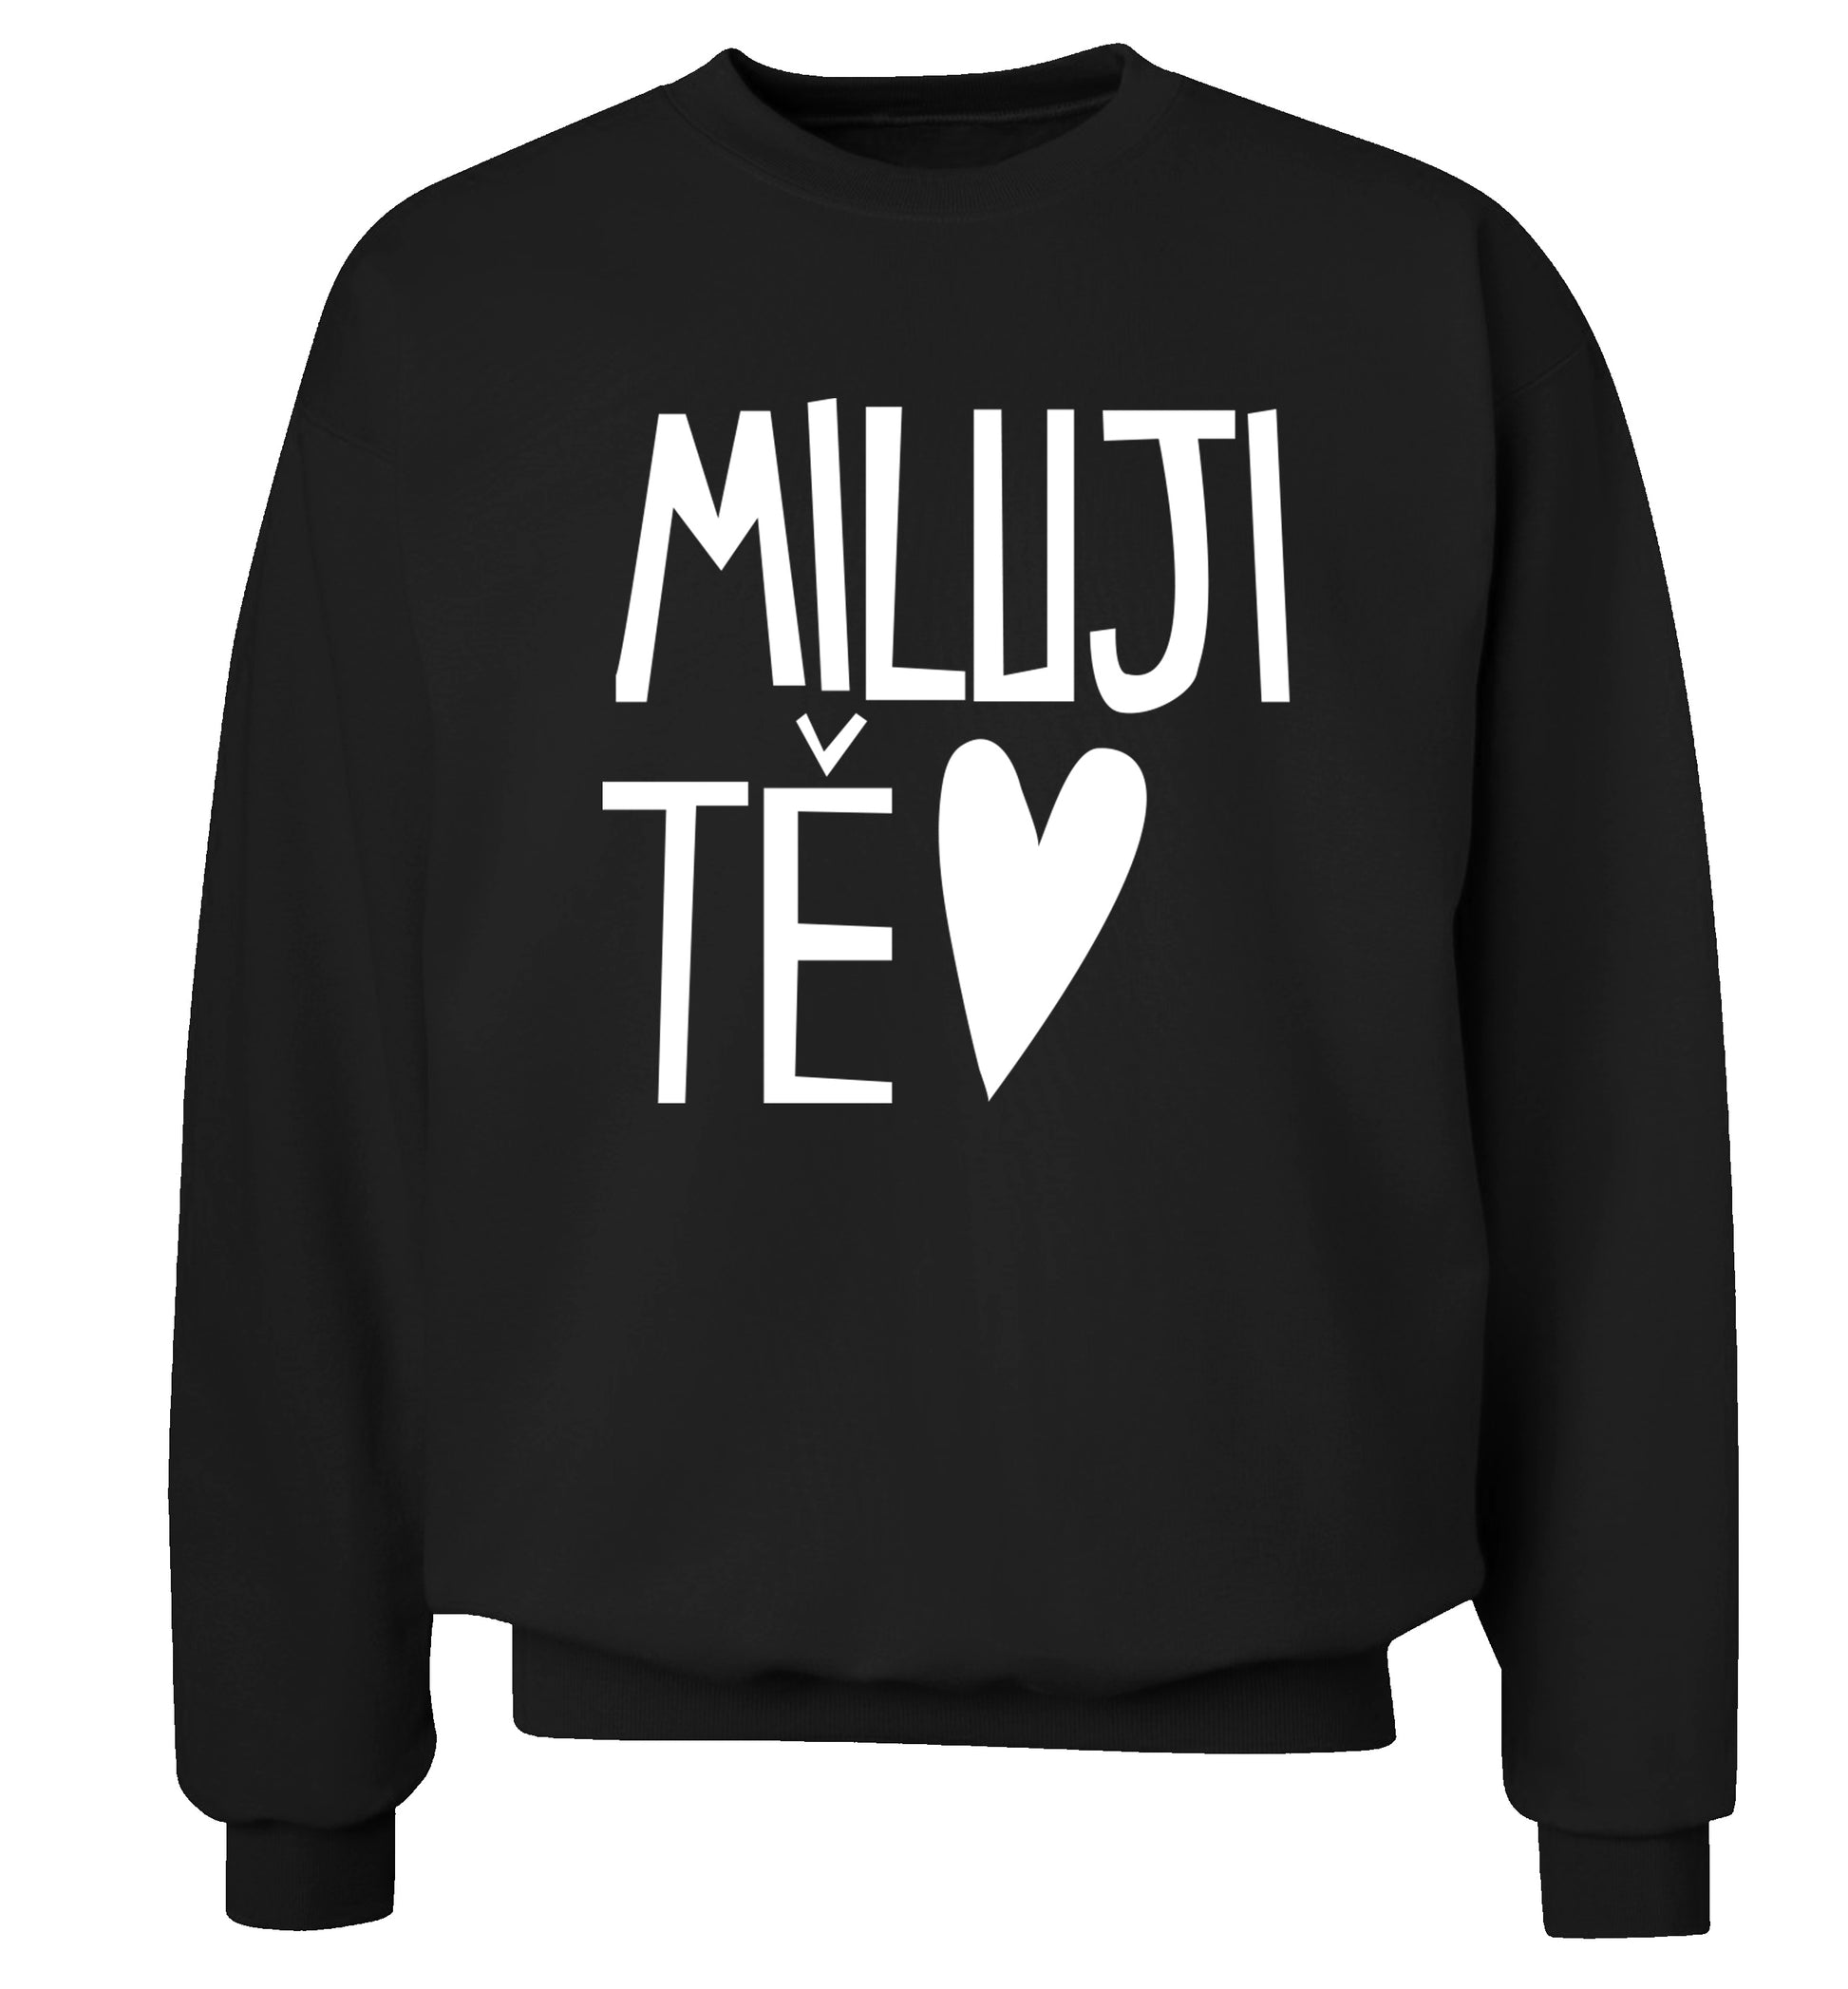 Miluji T_ - I love you Adult's unisex black Sweater 2XL